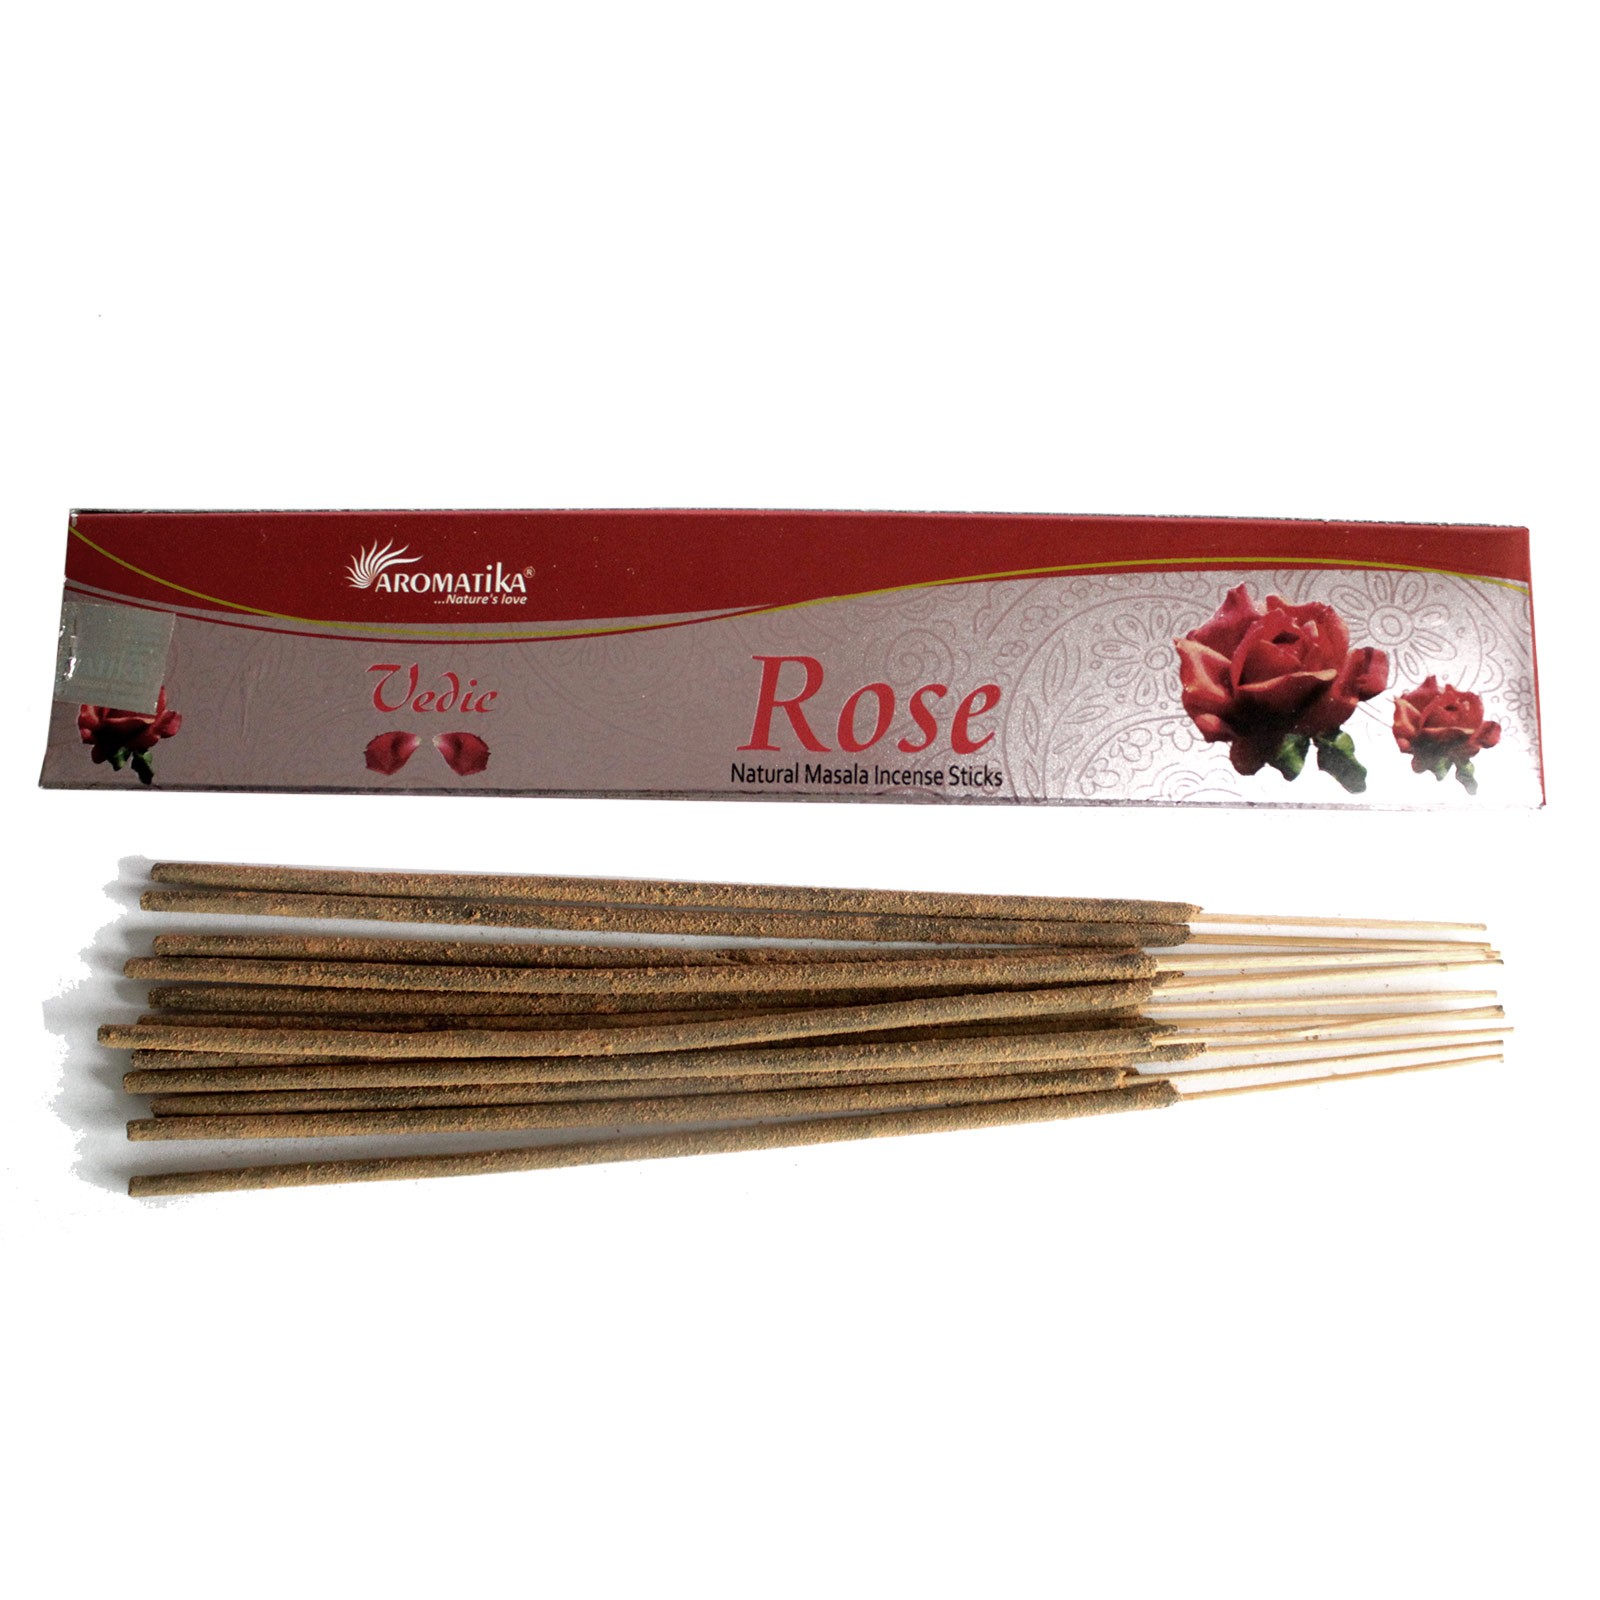 5 x Packs Vedic Incense Sticks - Rose